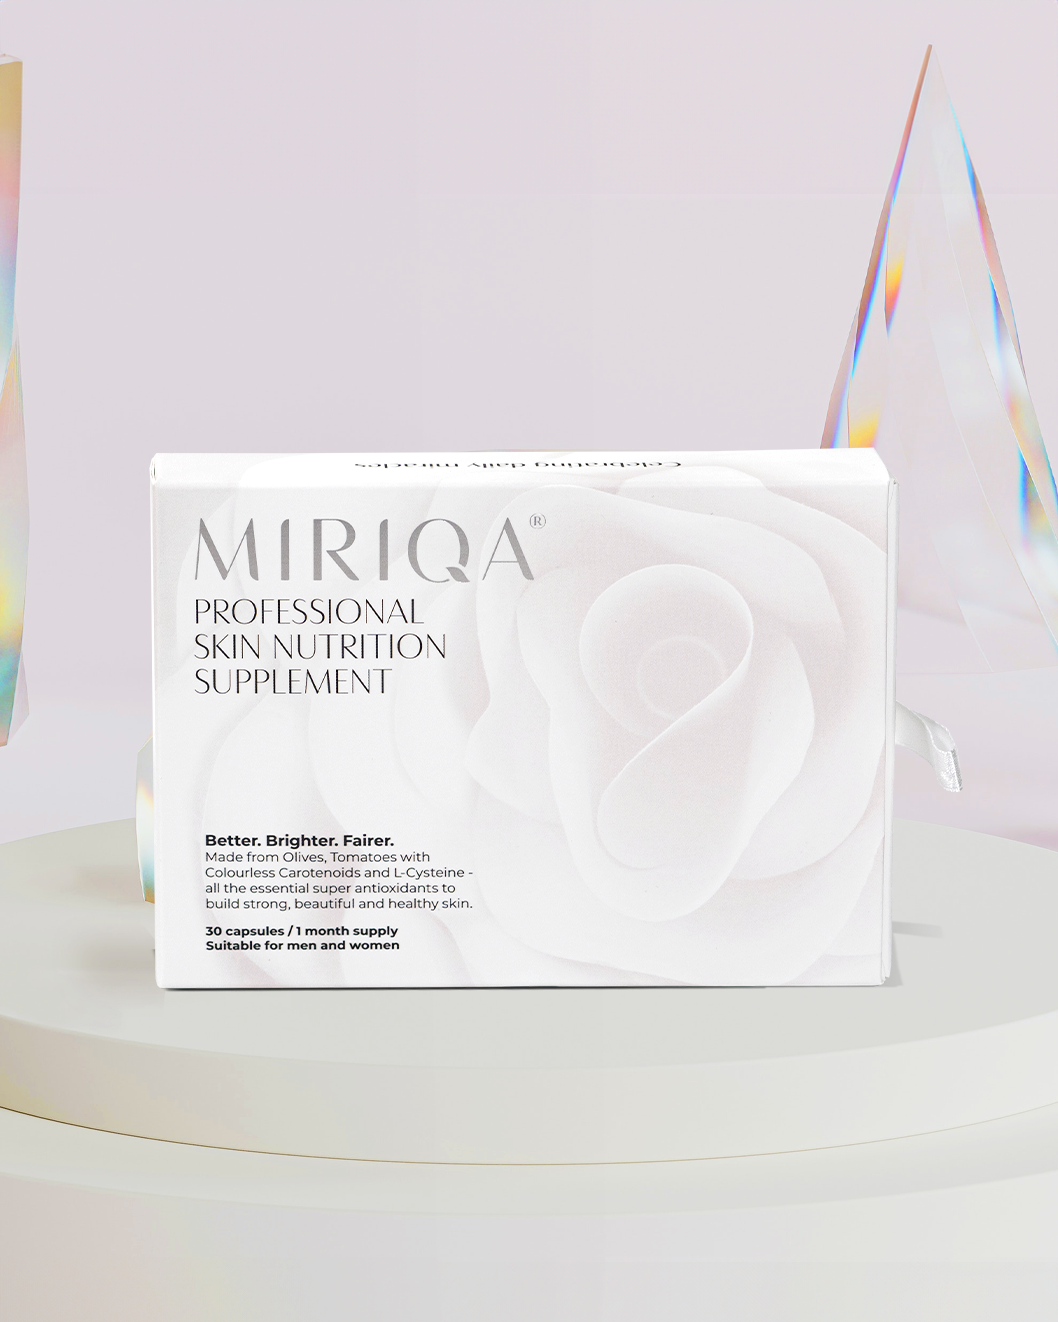 MIRIQA® Professional Skin Nutrition Supplement (Free Gift)